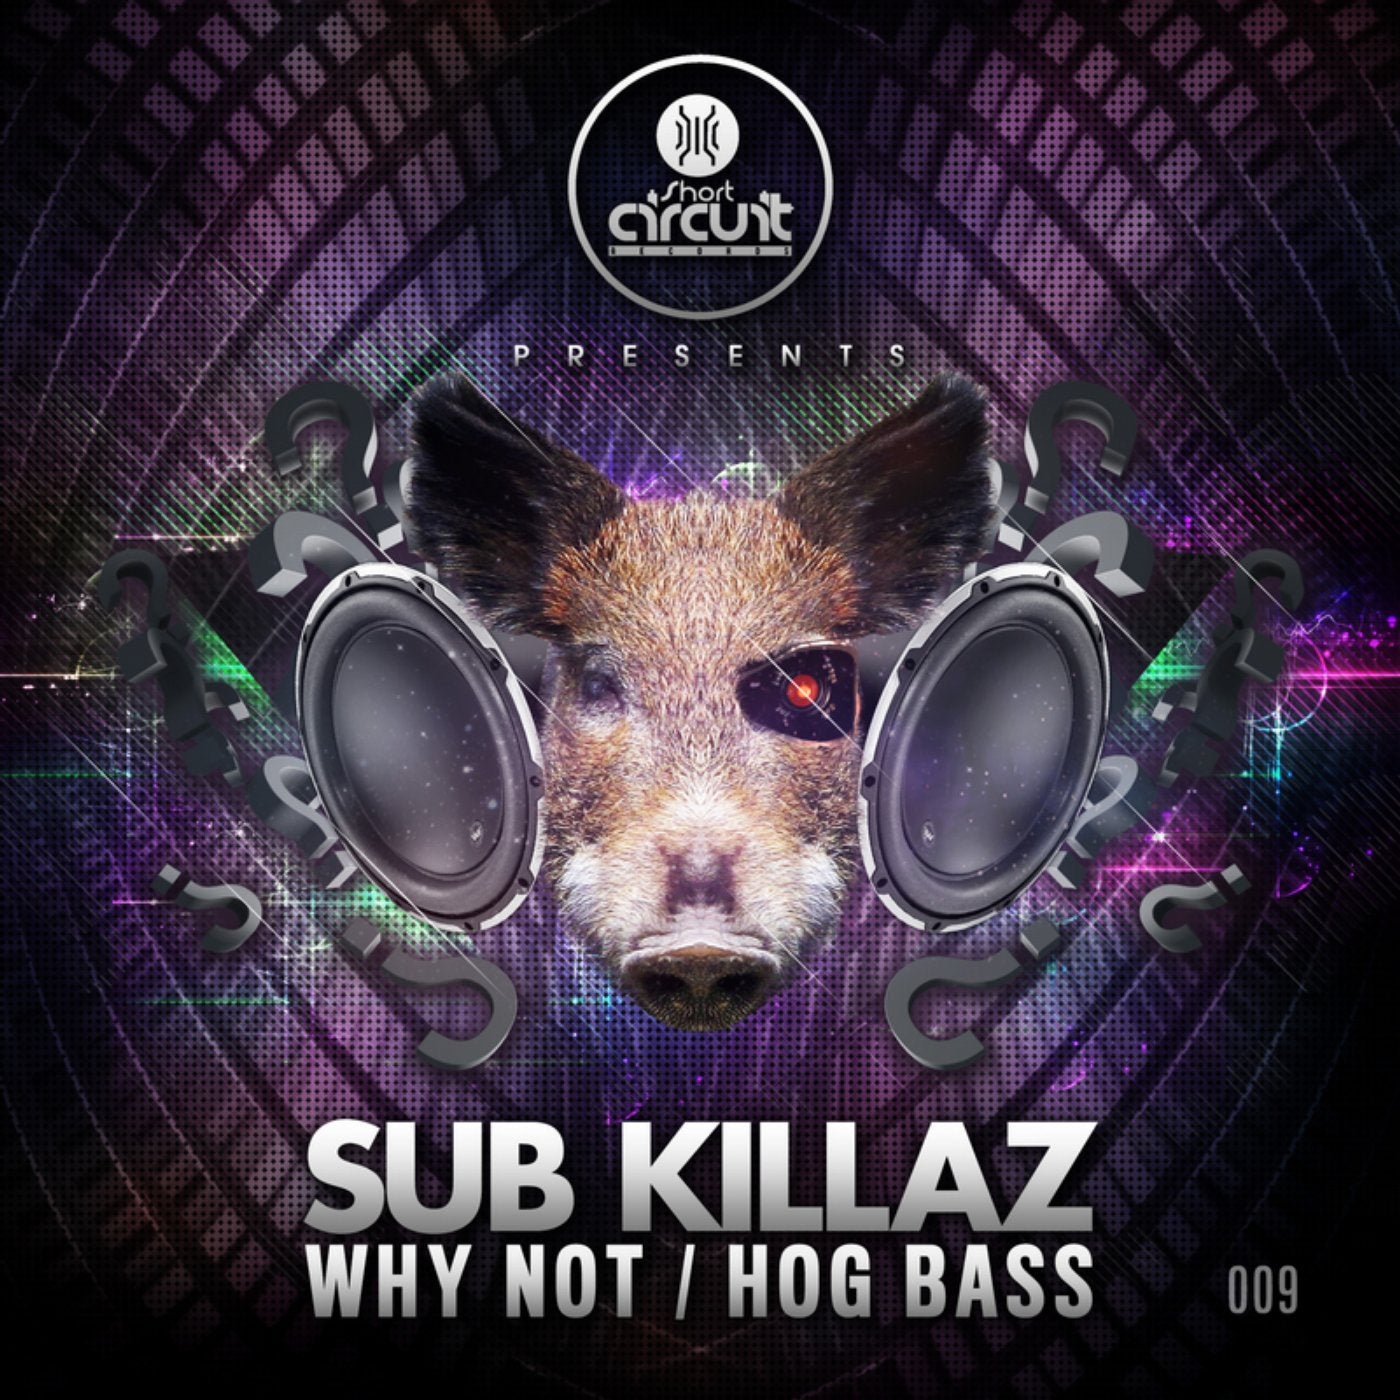 Sub Killaz - Why Not / Hog Bass